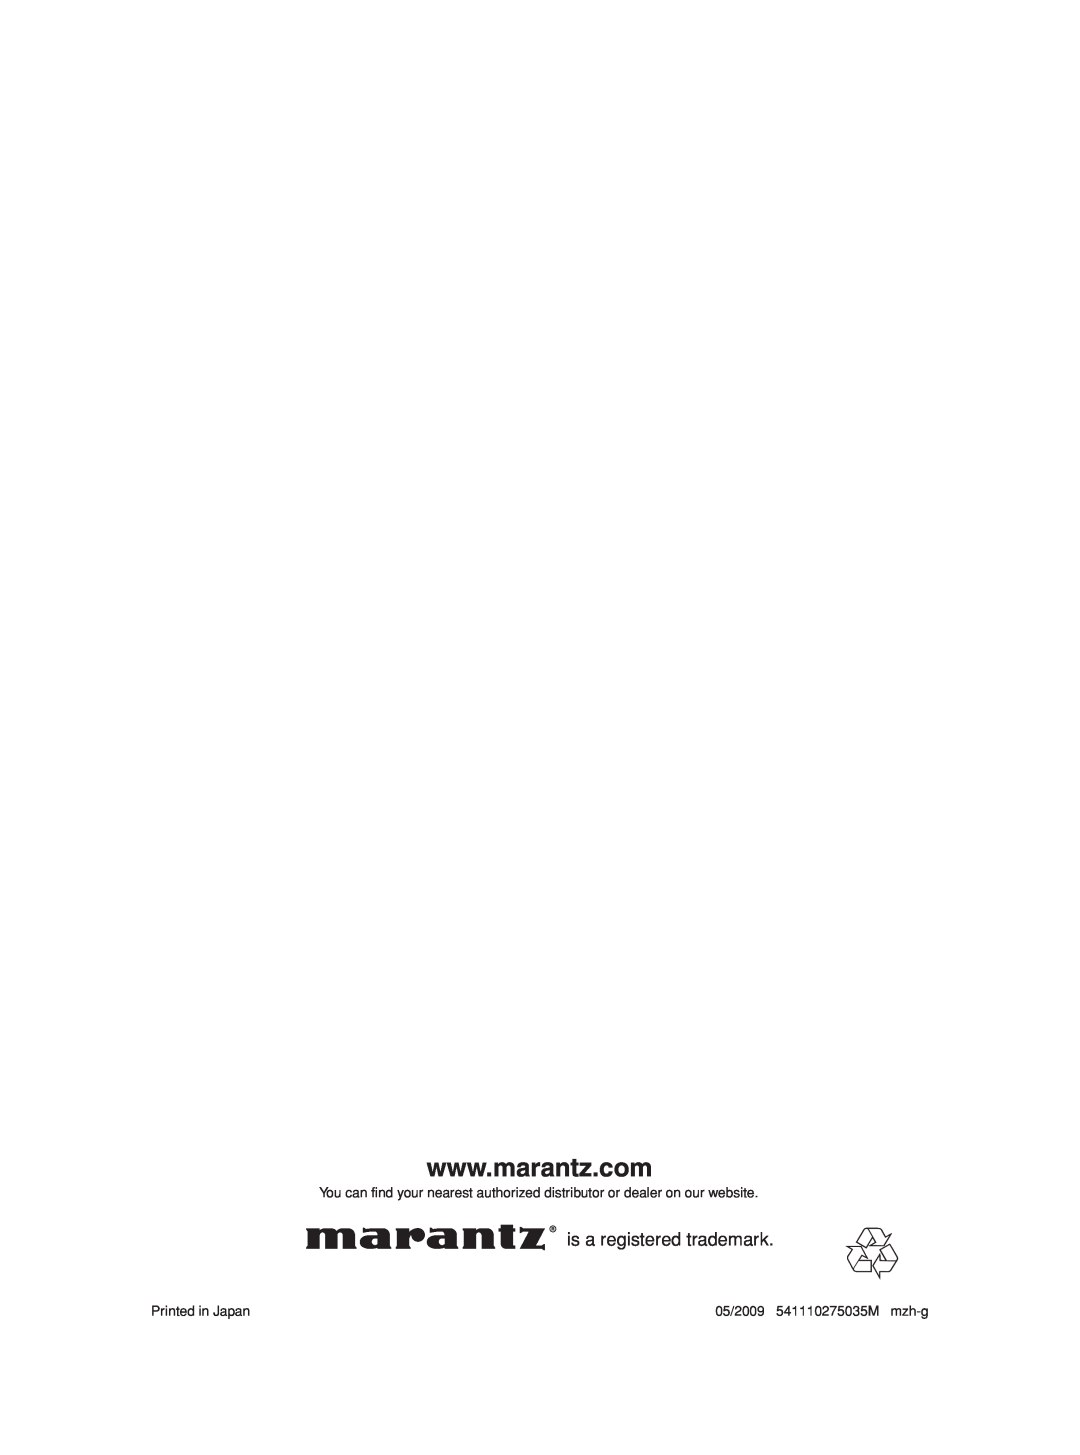 Marantz 541110275035M manual is a registered trademark 